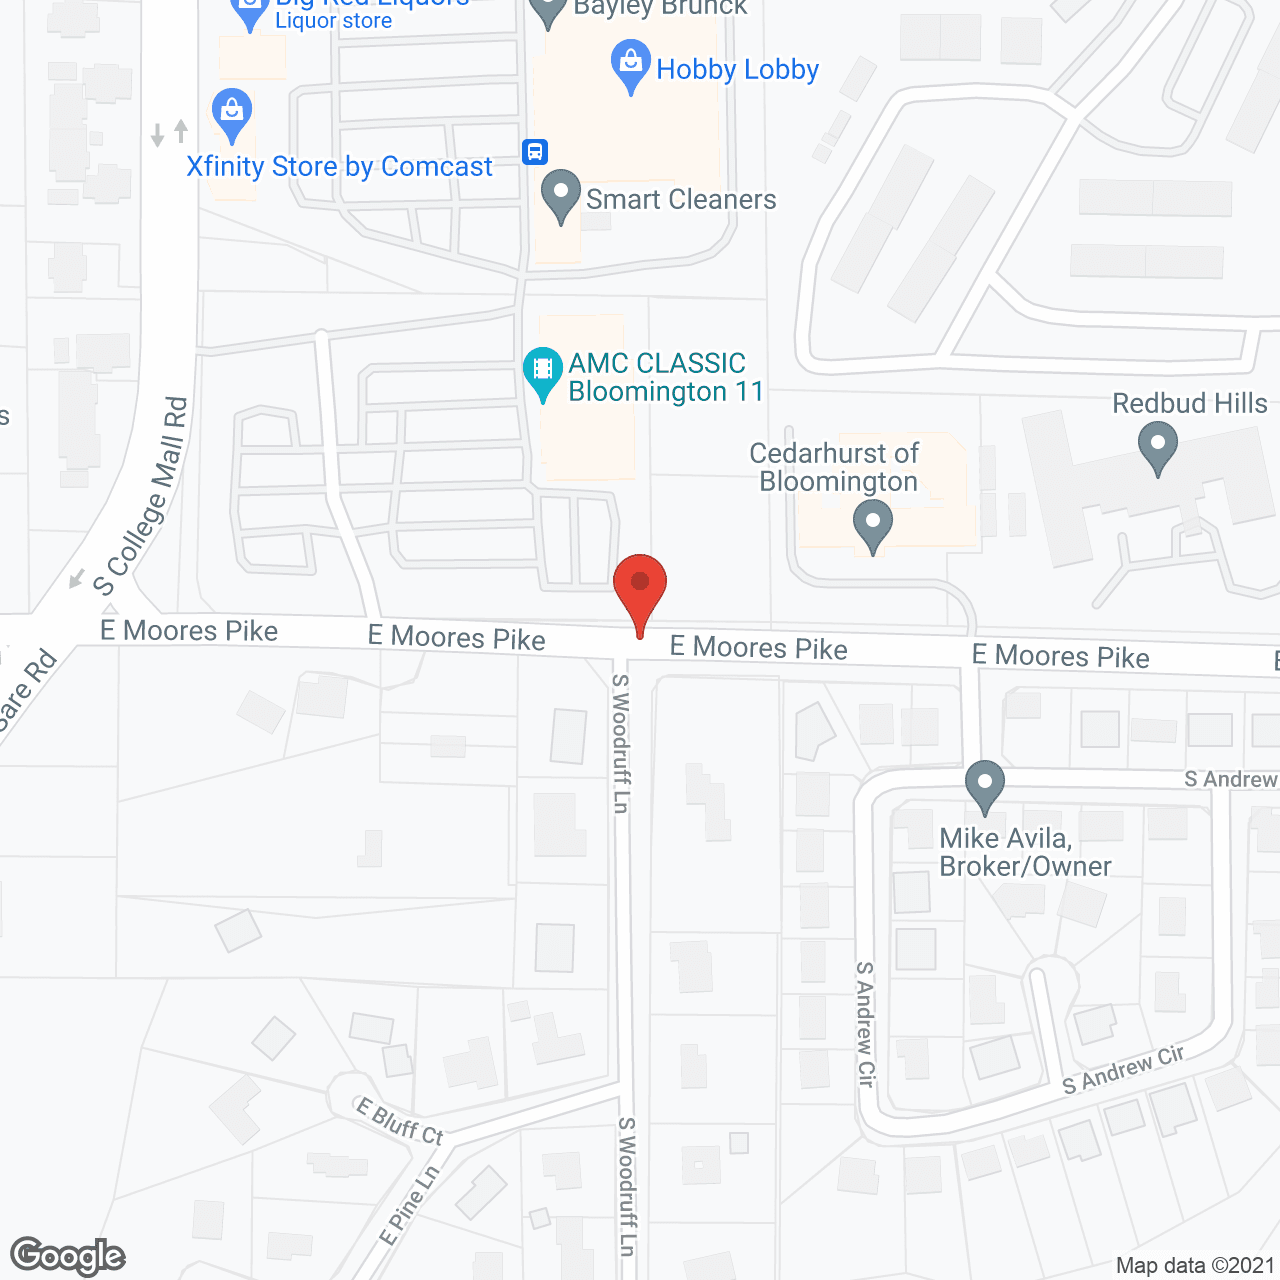 Cedarhurst of Bloomington in google map